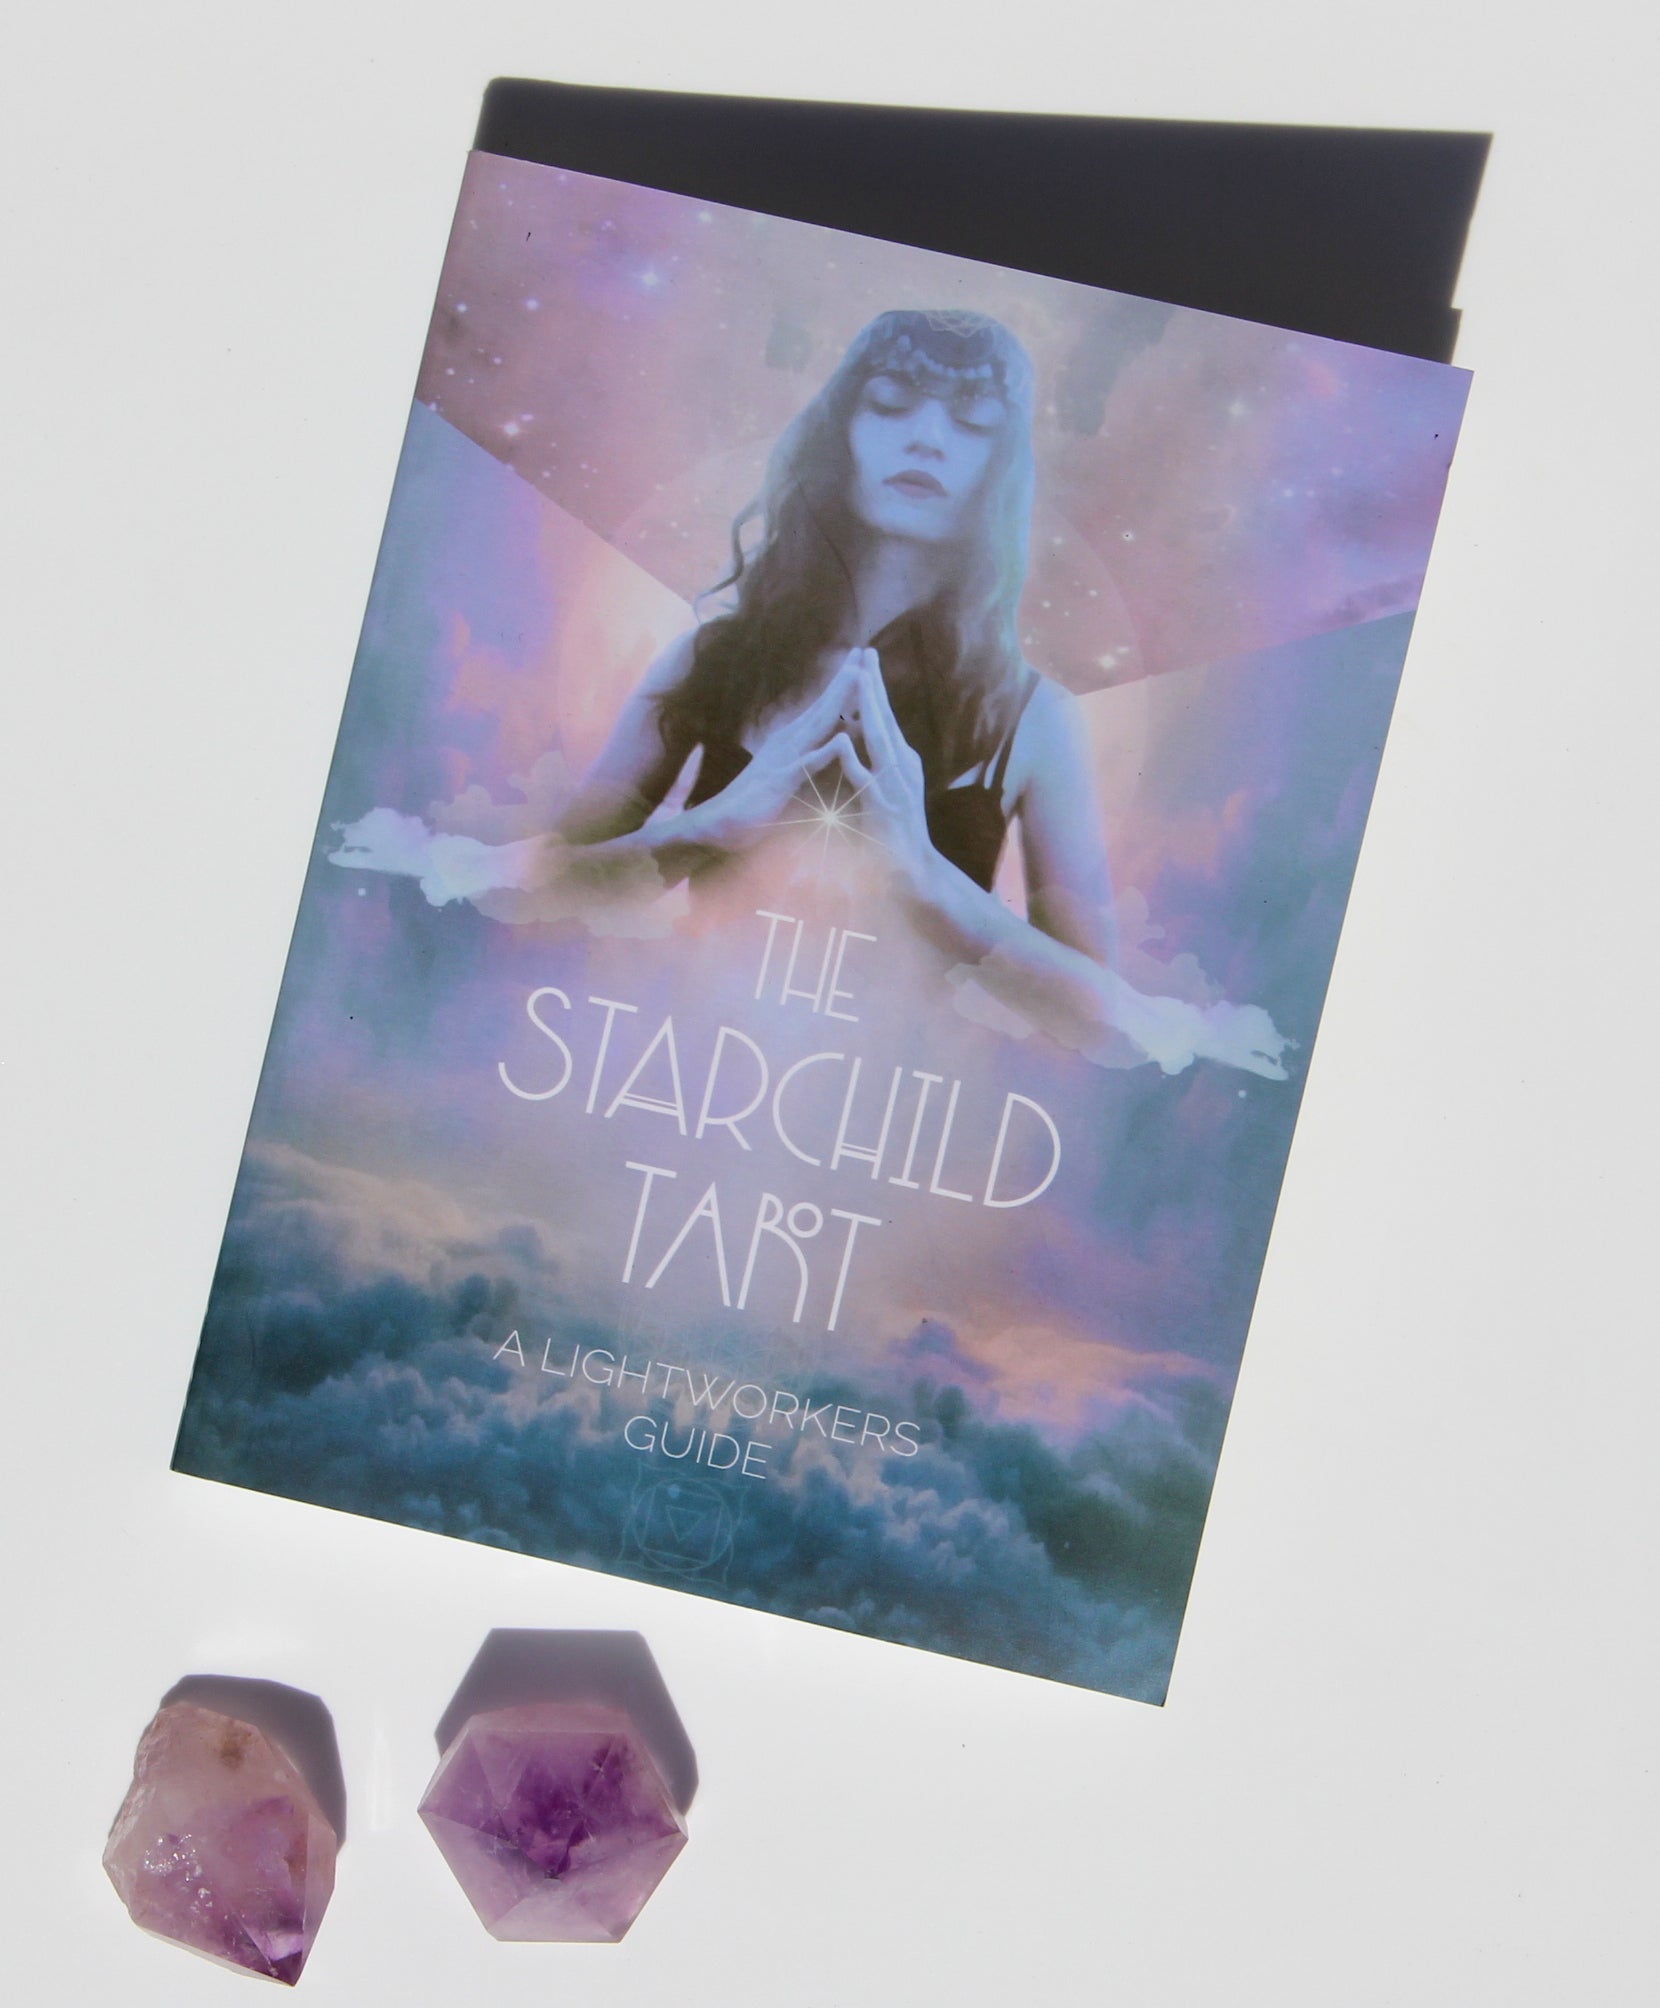 The Starchild Tarot Deck